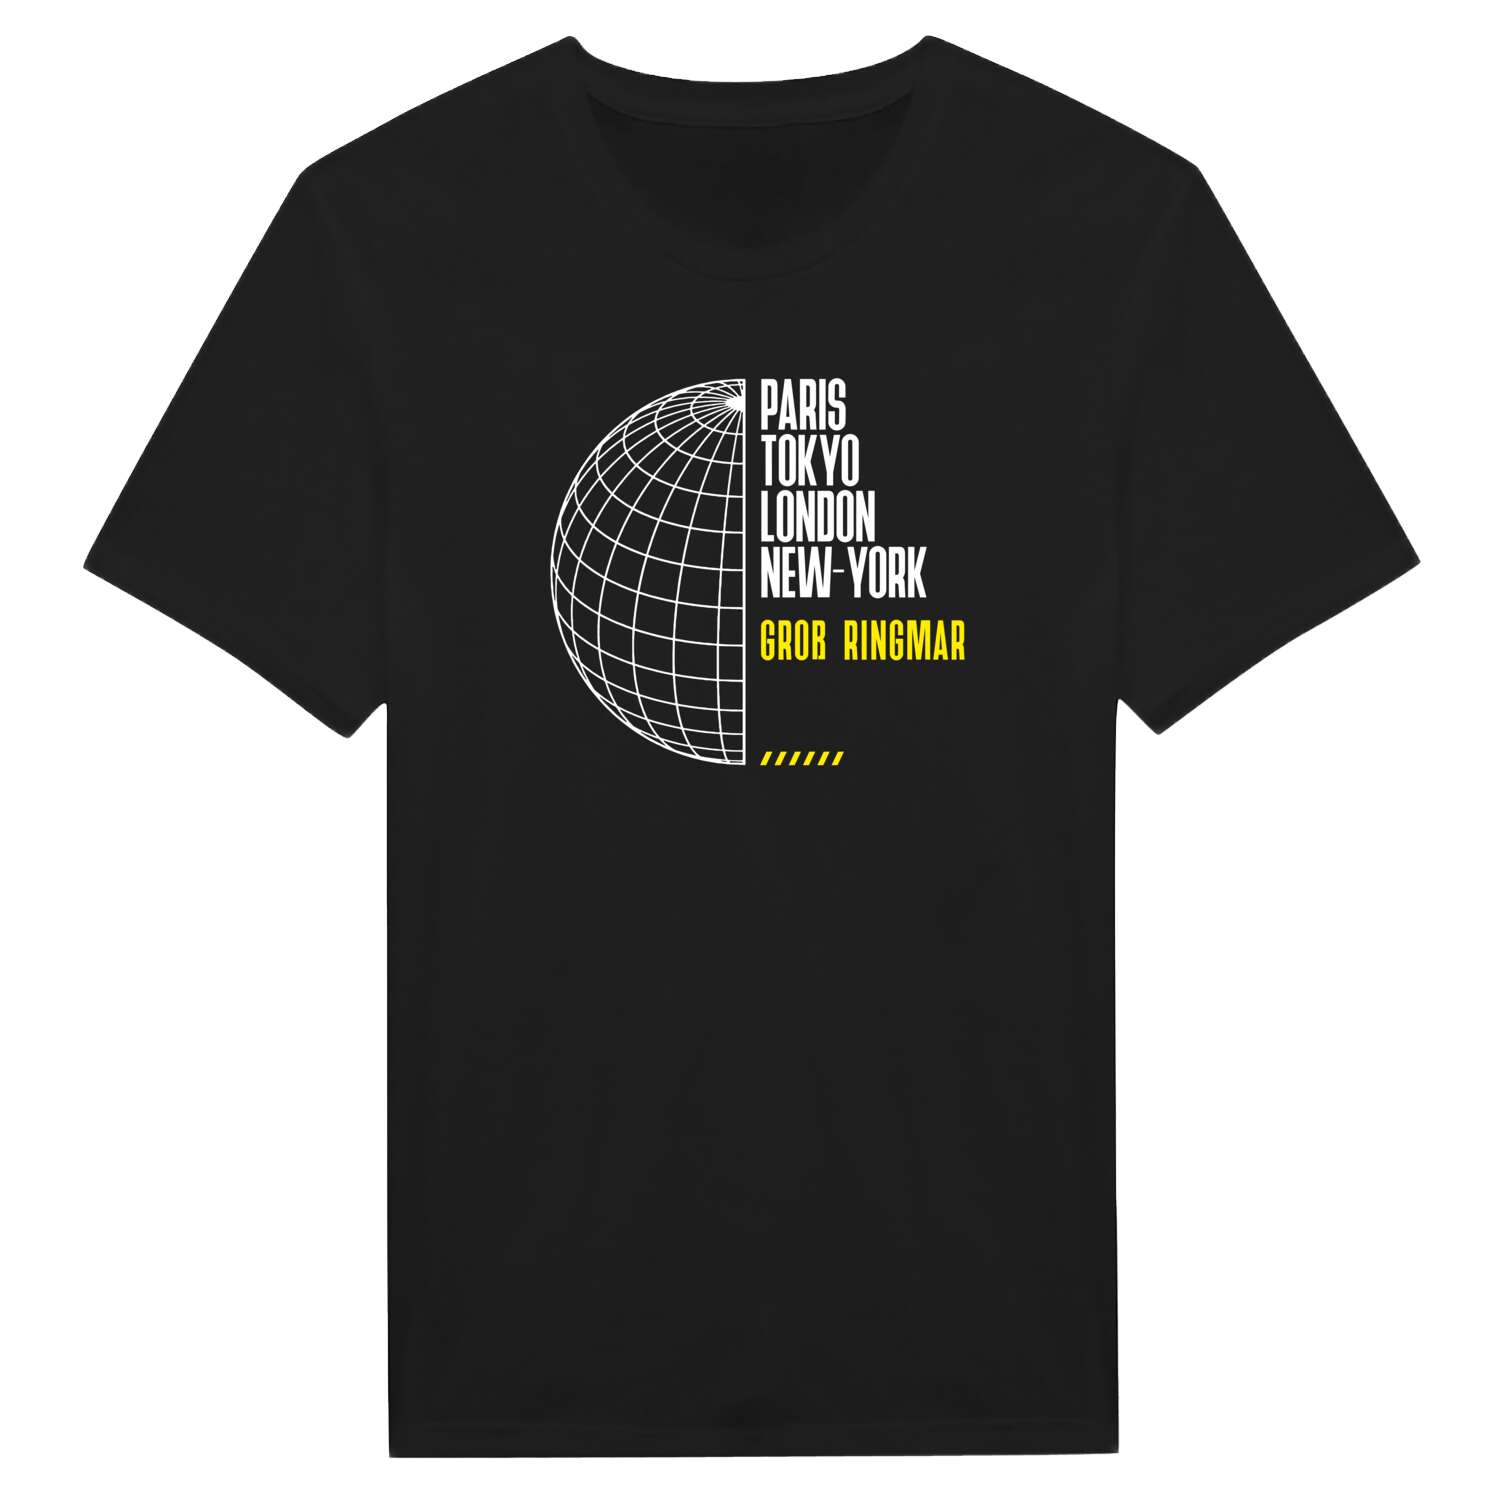 Groß Ringmar T-Shirt »Paris Tokyo London«